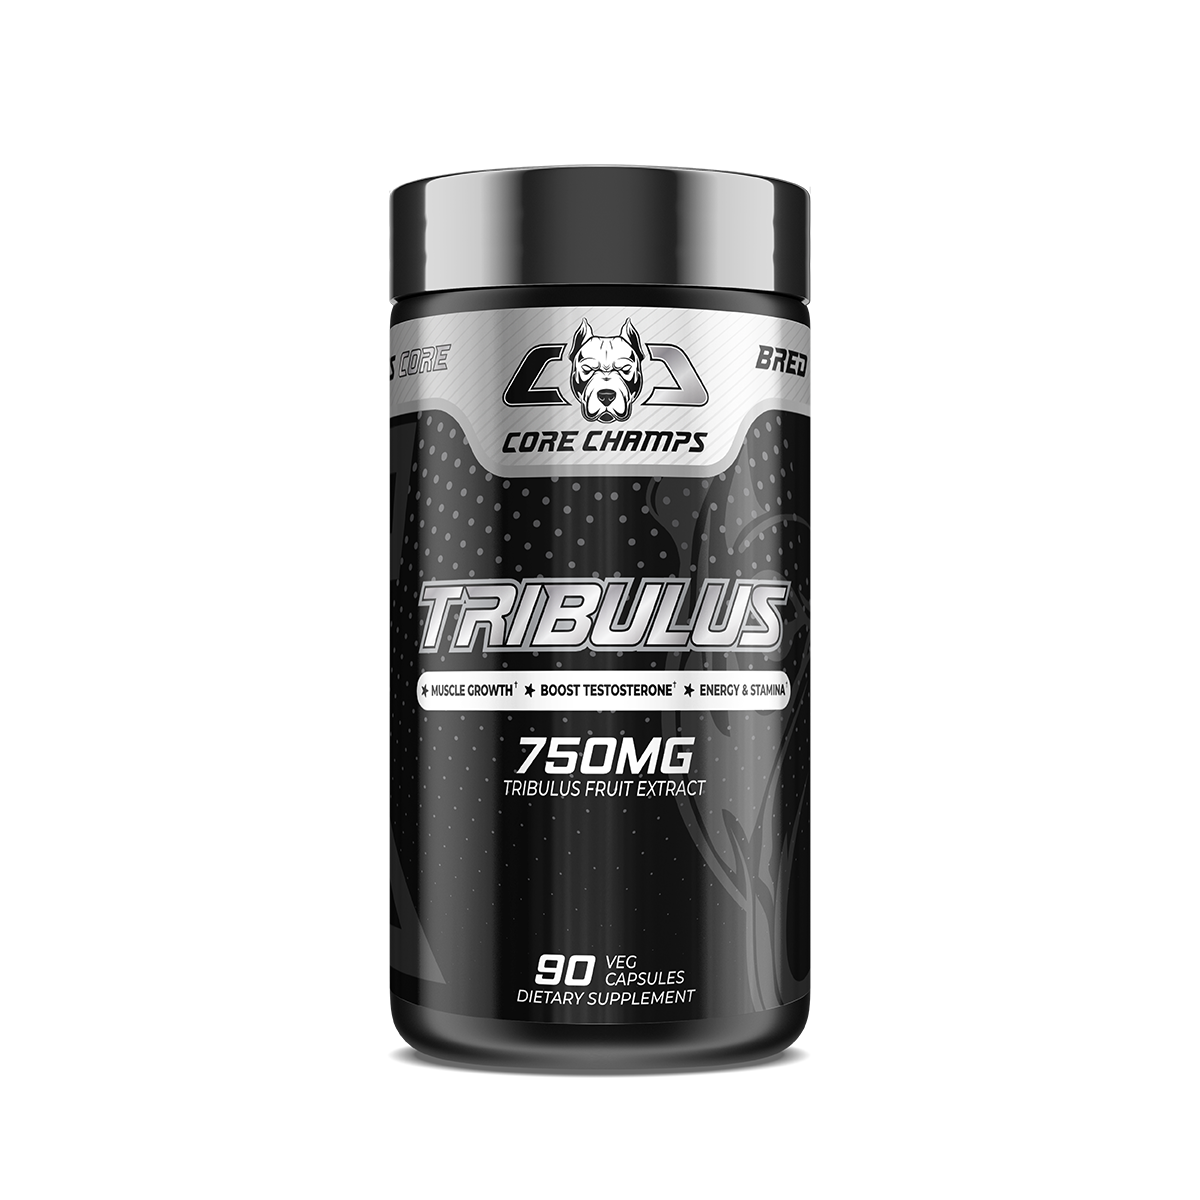 Core Champs TRIBULUS 90 Veg Capsules Testosterone Support